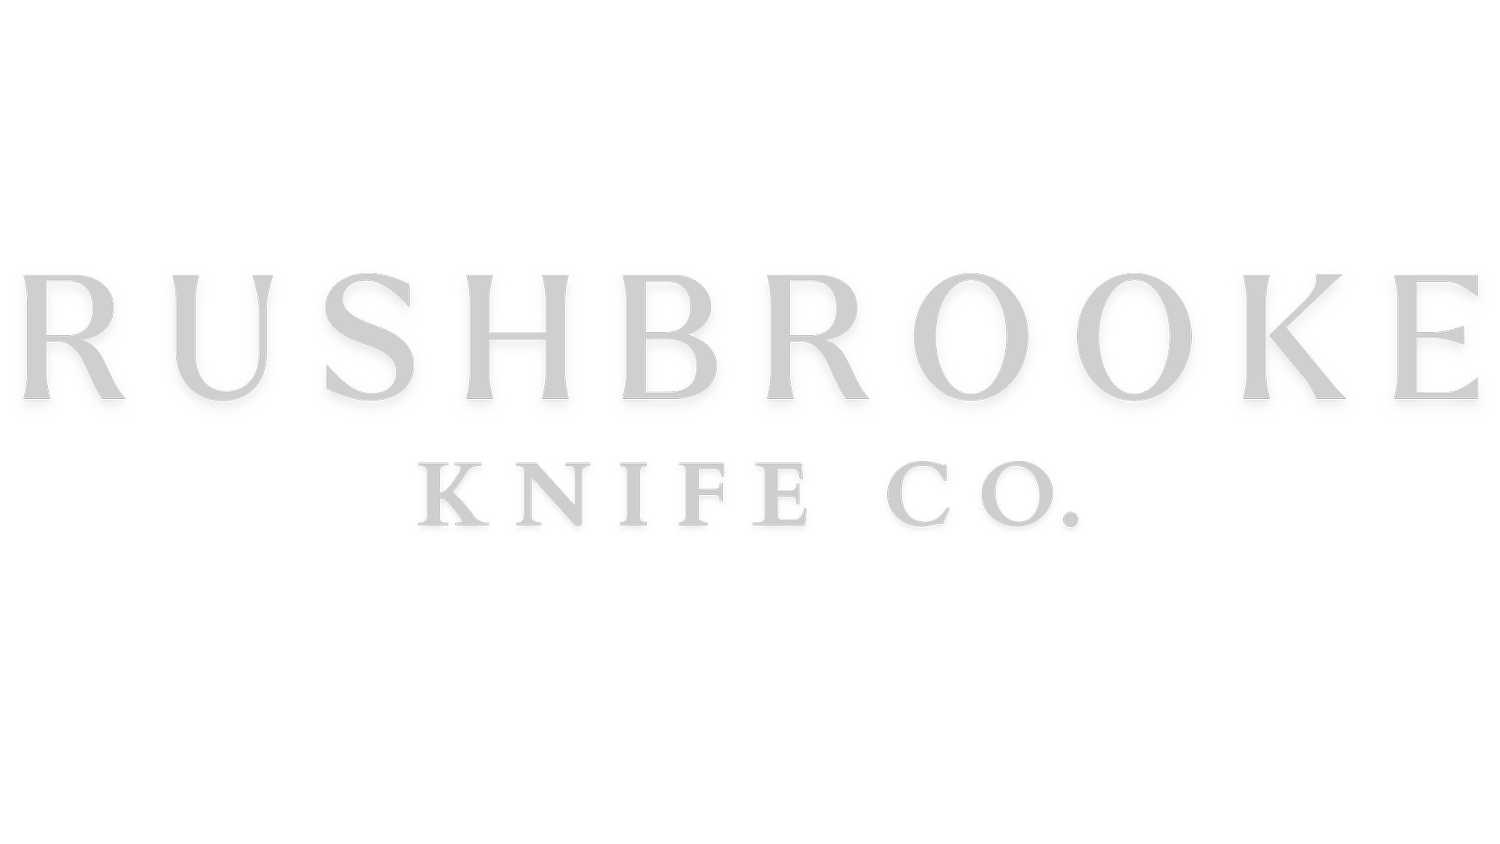 Rushbrooke Knife Company